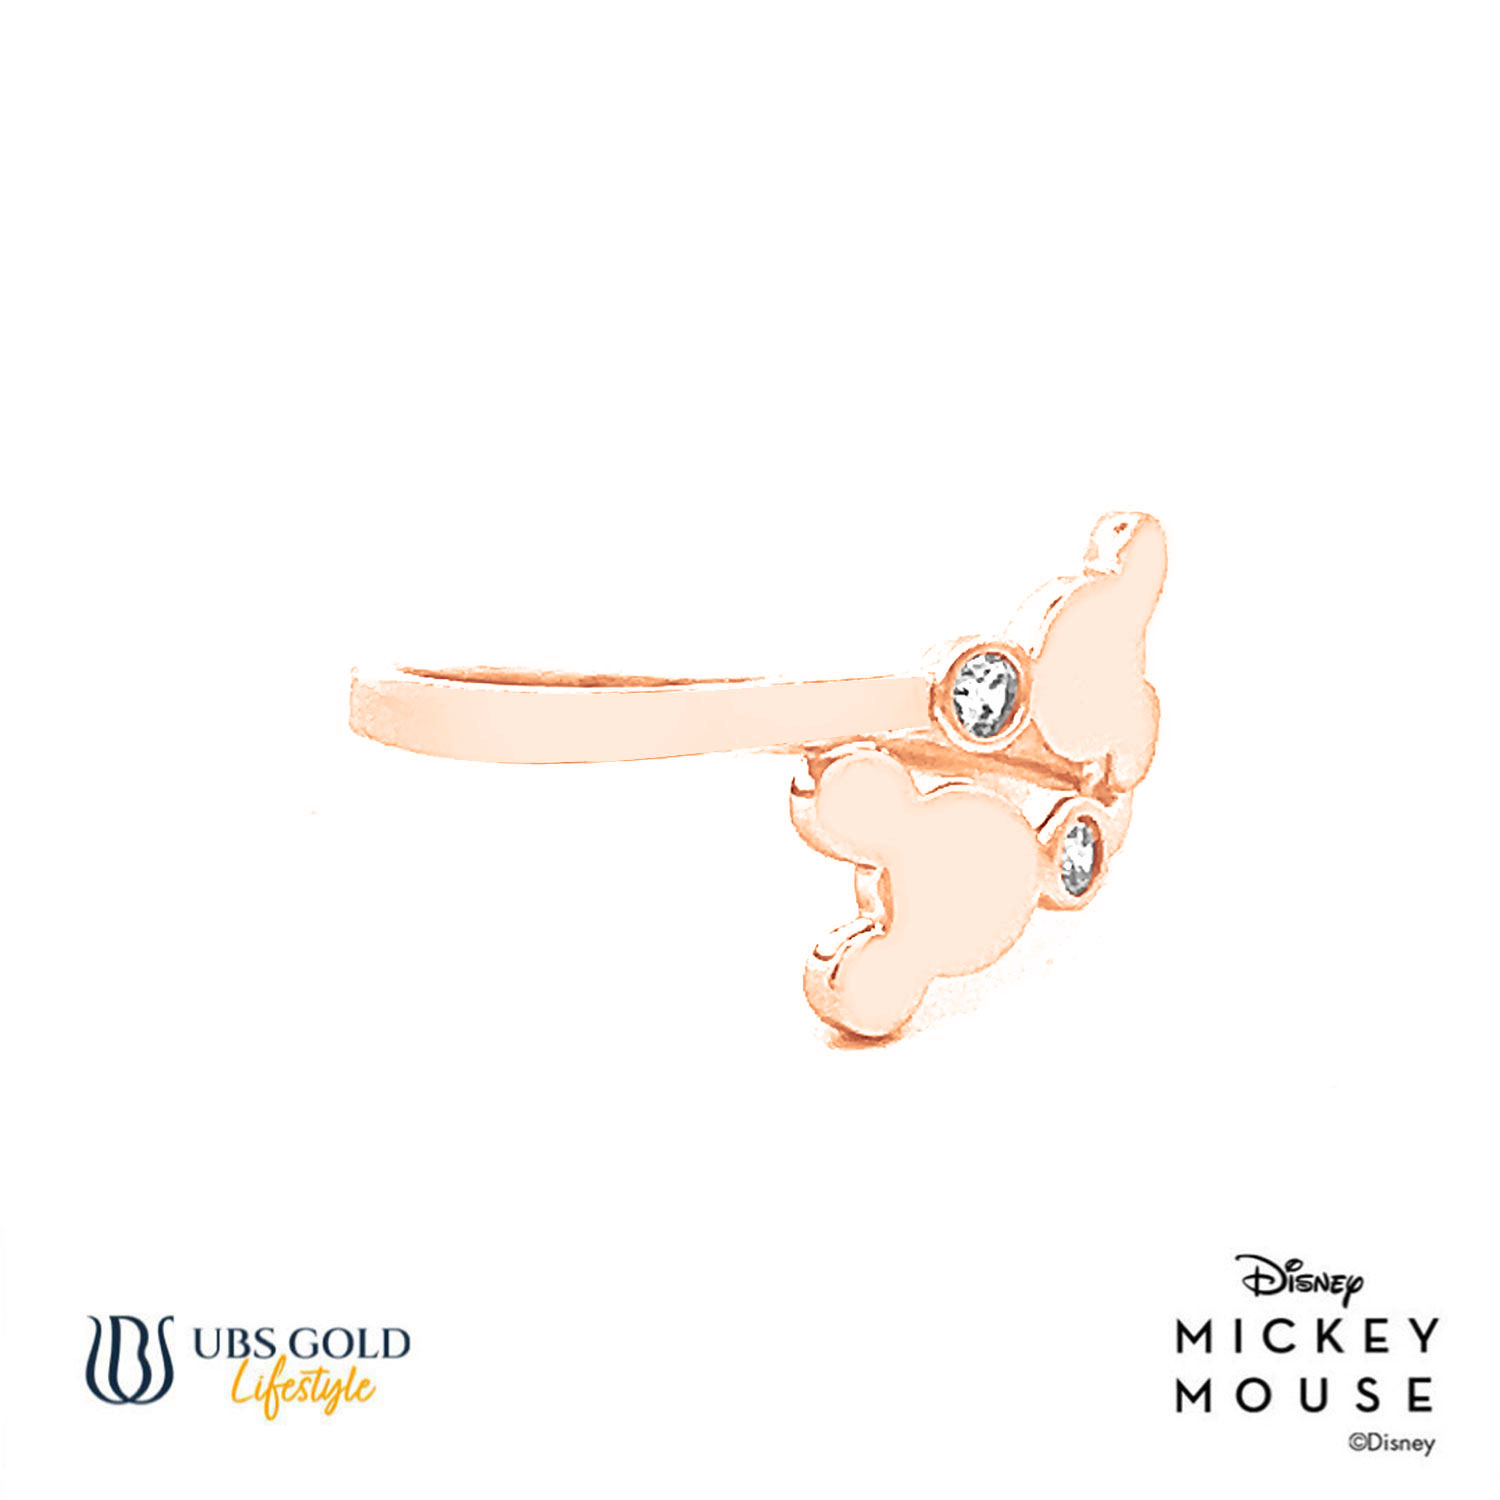 UBS Gold Cincin Emas Disney Mickey Mouse - Ccy0061 - 17K